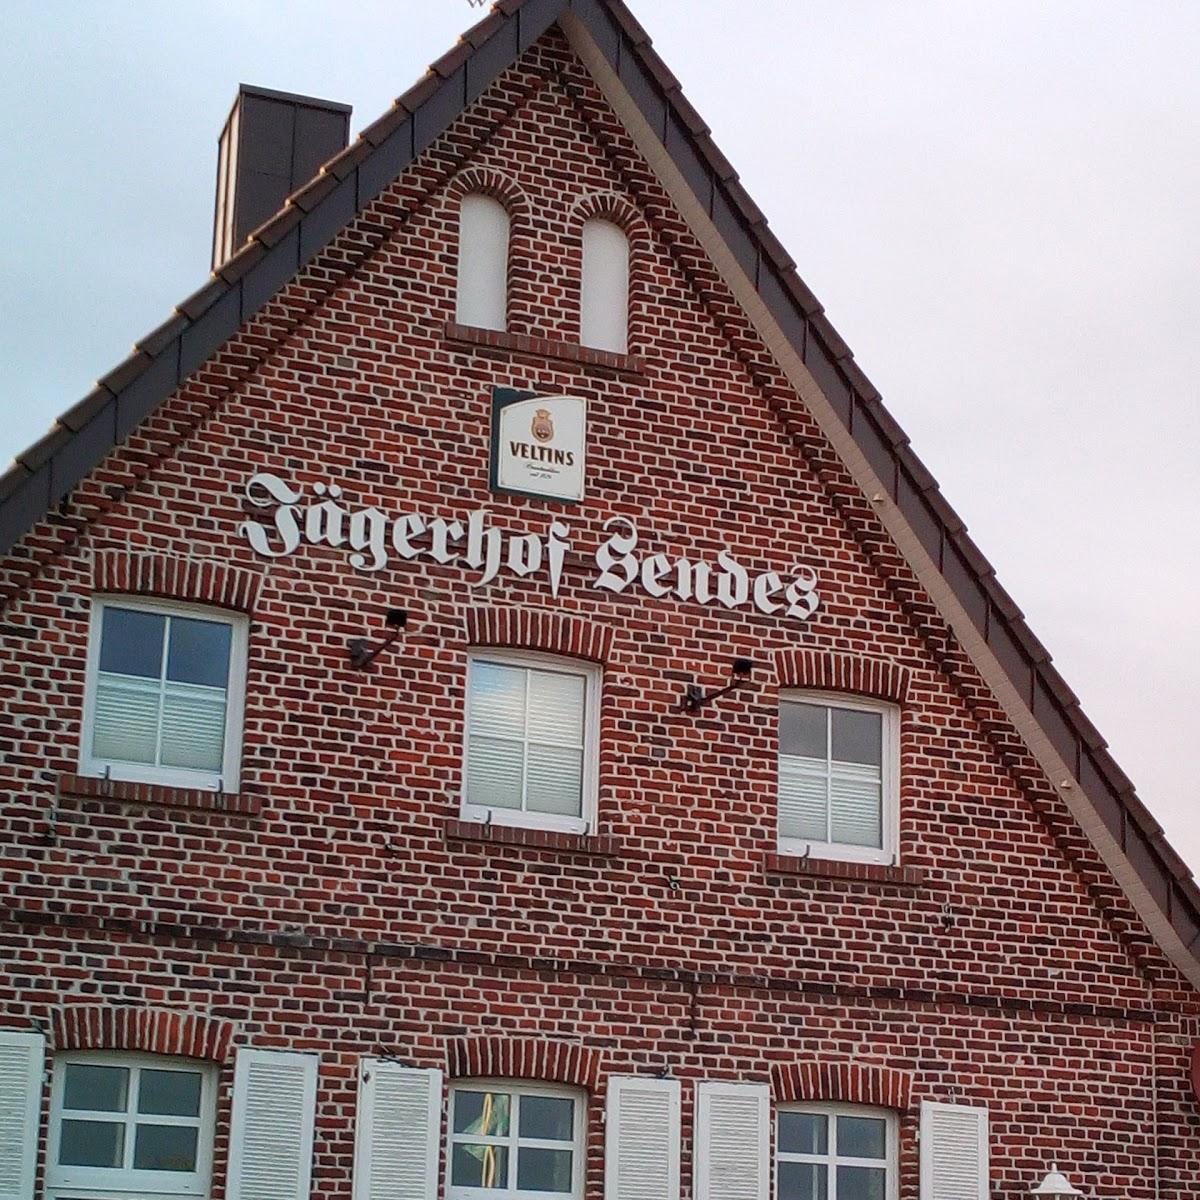 Restaurant "Gaststätte Jägerhof Sendes" in  Nottuln